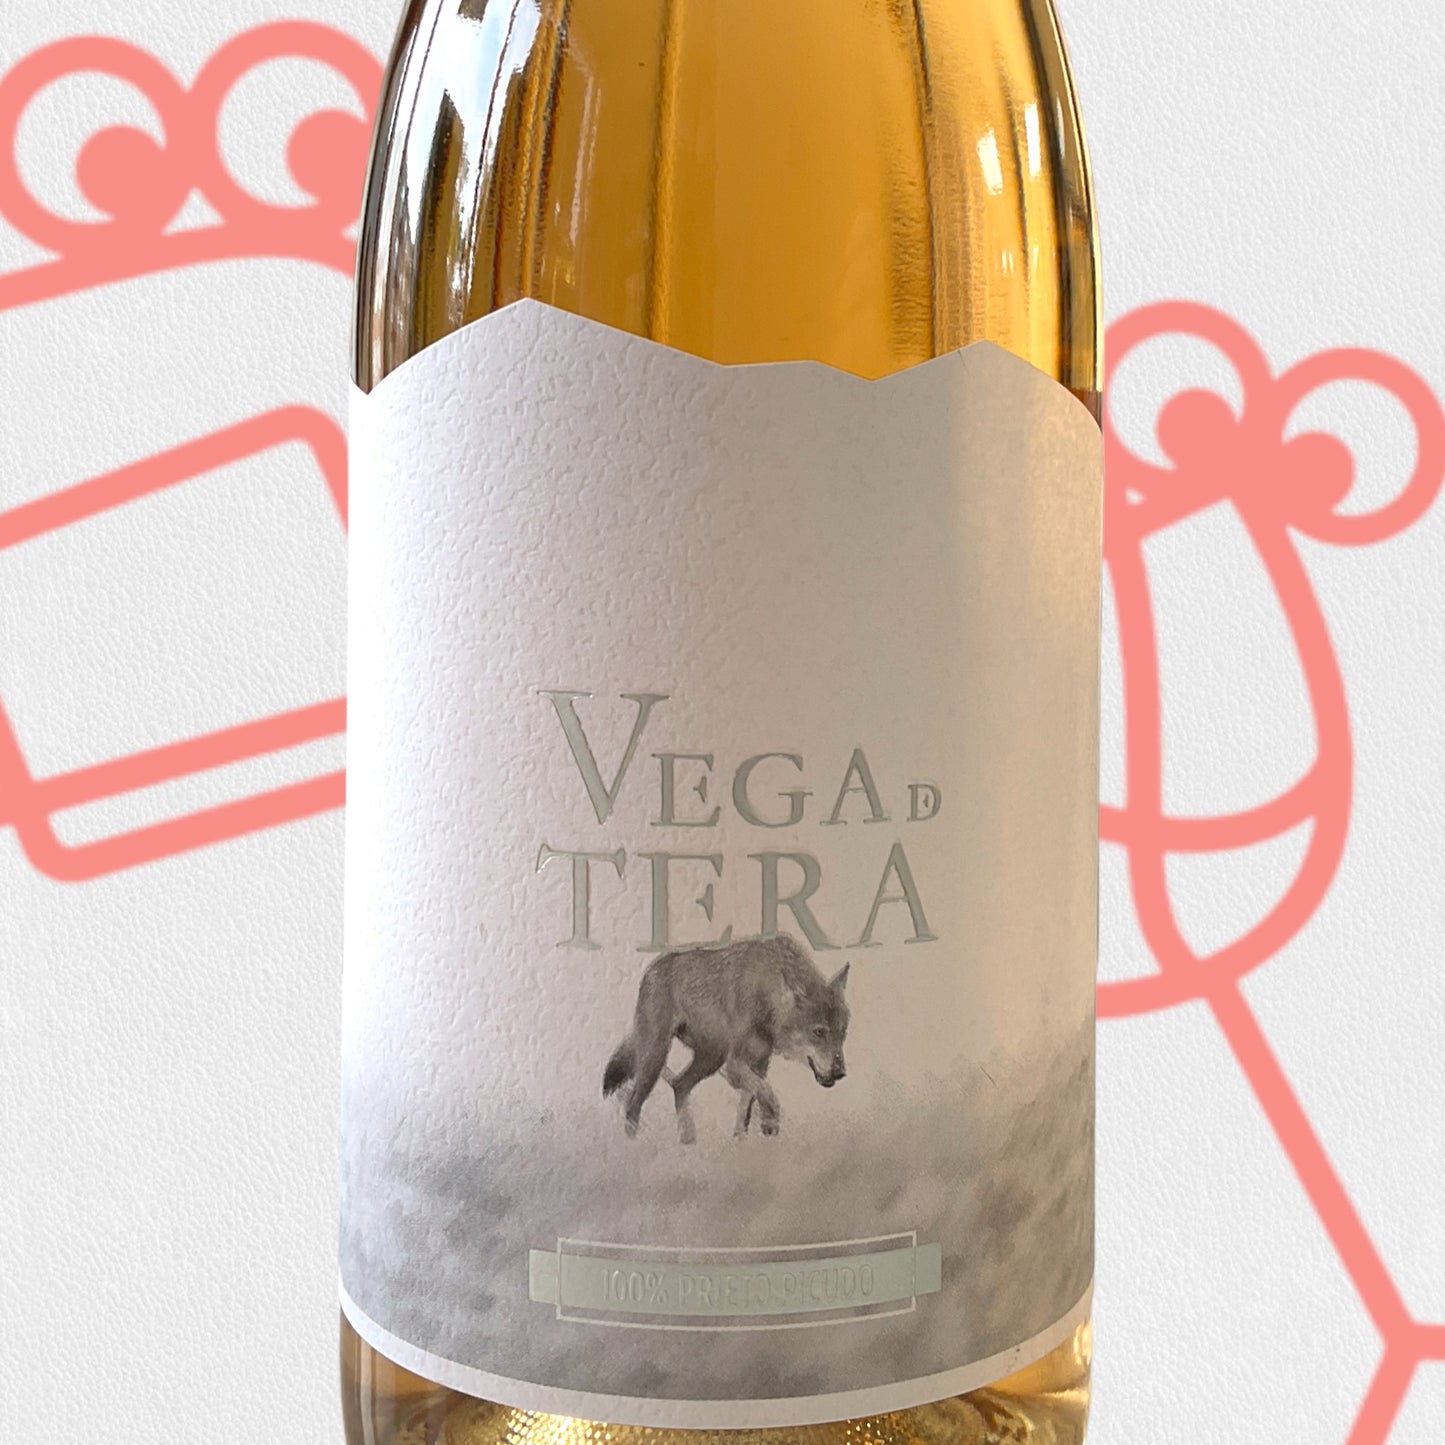 Vega de Tera Rosado Spain 2020 Castilla y Leon, Spain - Williston Park Wines & Spirits